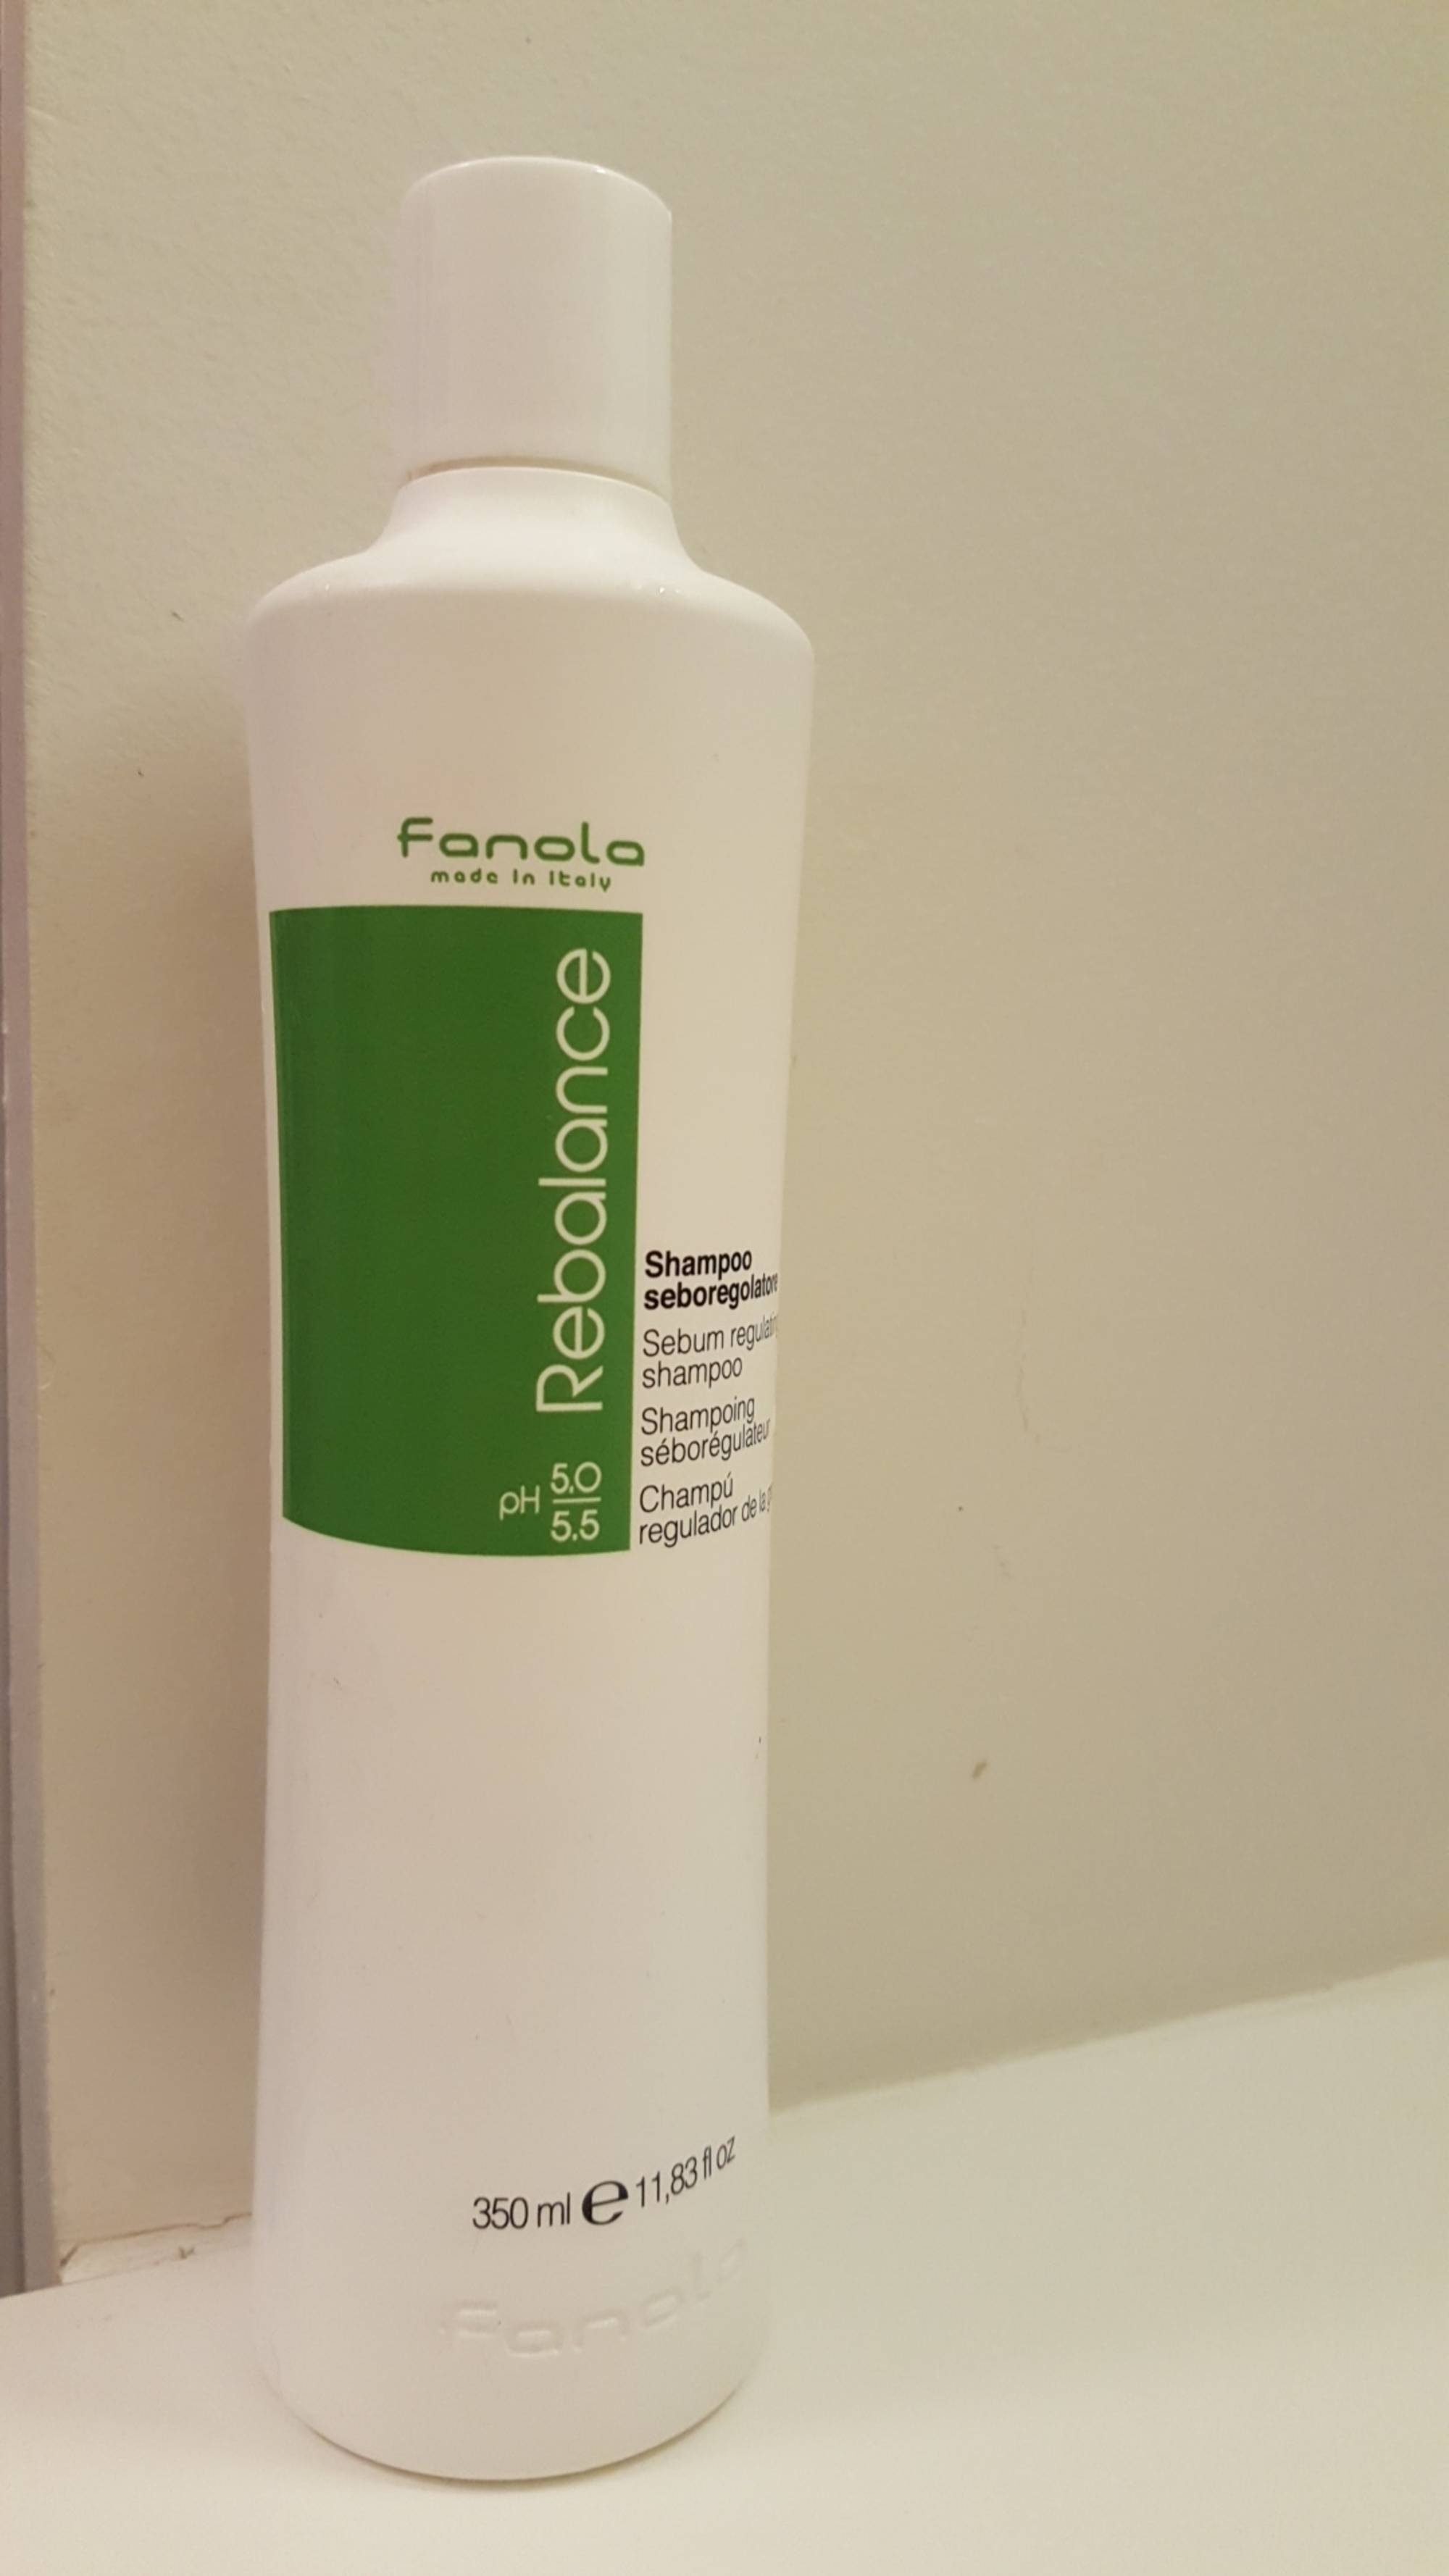 FANOLA - Rebalance - Shampoo séborégulateur